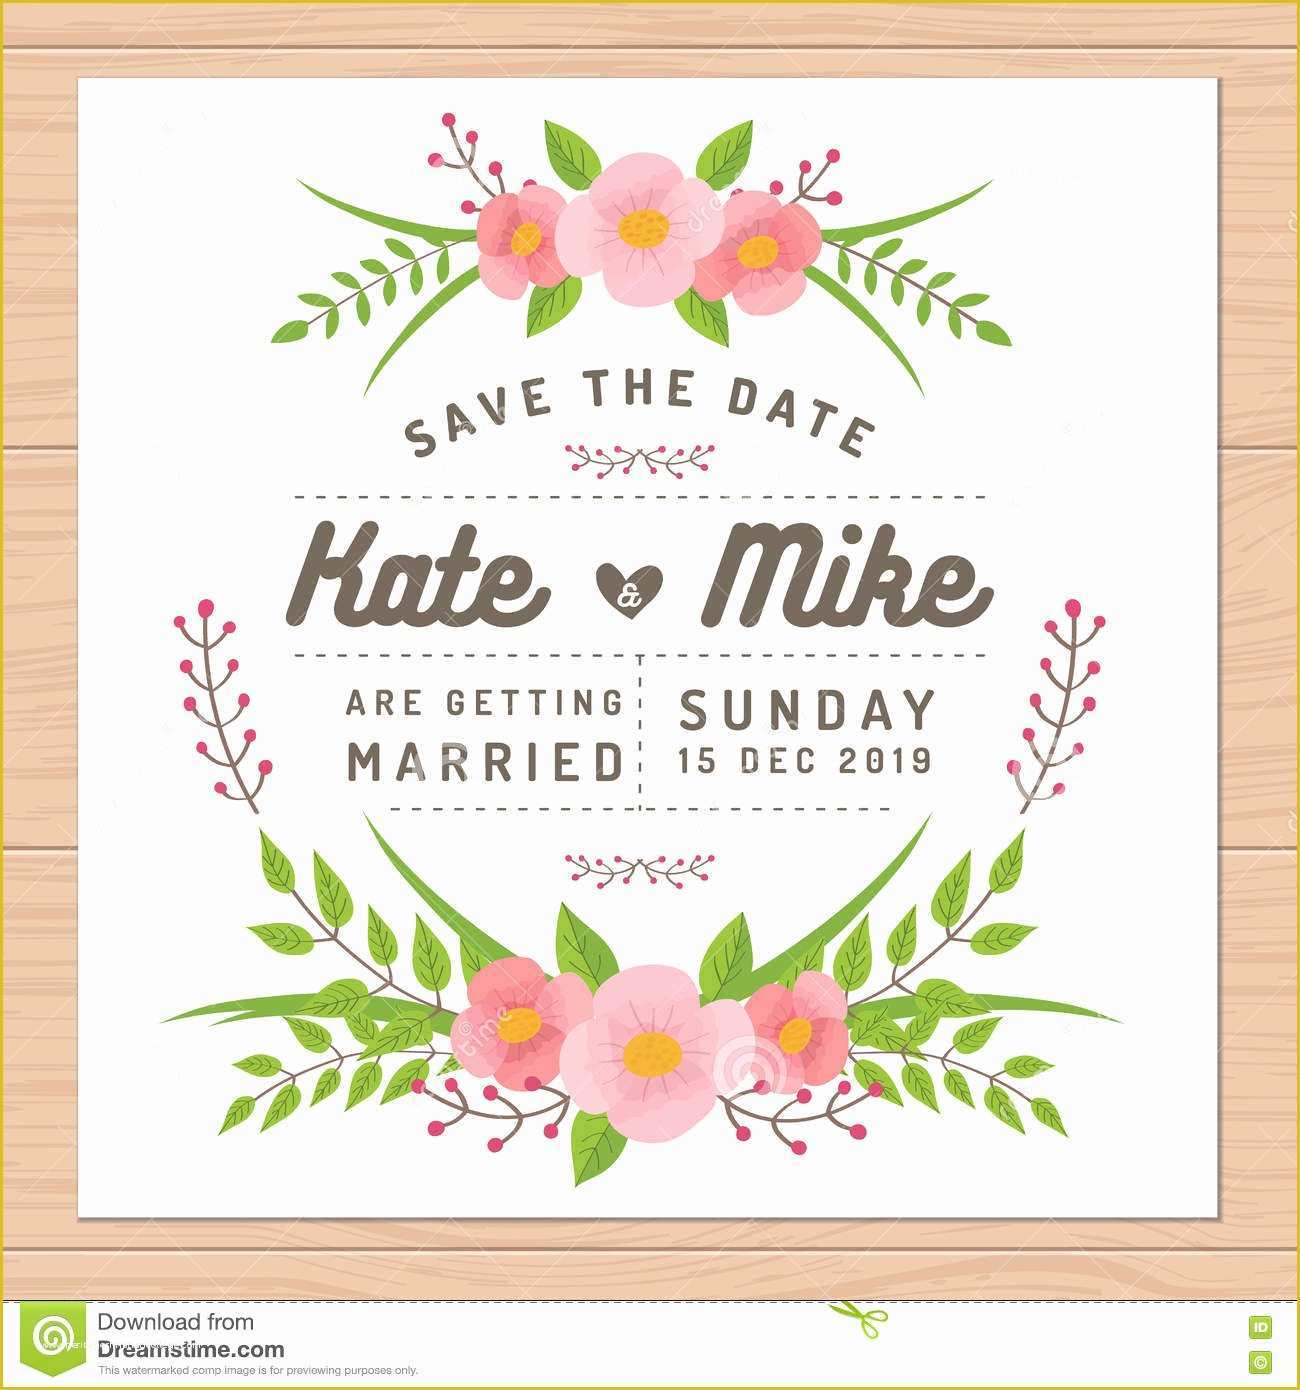 Free Save the Date Wedding Invitation Templates Of Save the Date Wedding Invitation Card with Flower